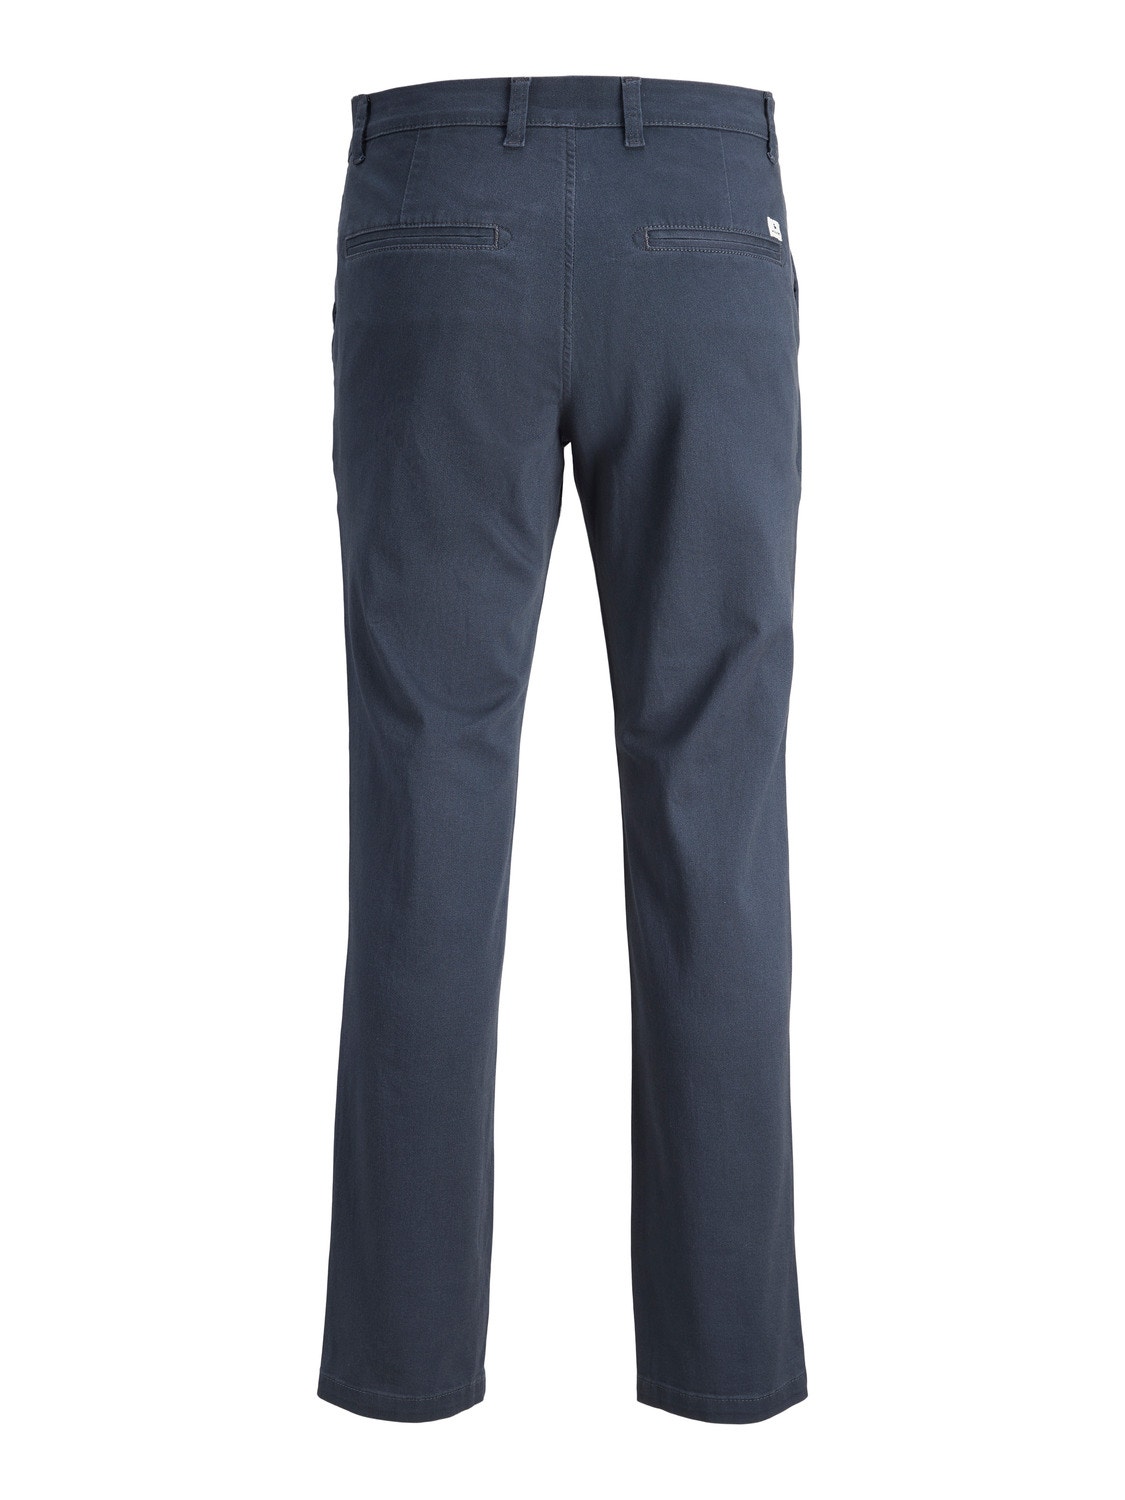 Jack & Jones Pantaloni chino Regular Fit Per Bambino -Navy Blazer - 12224625